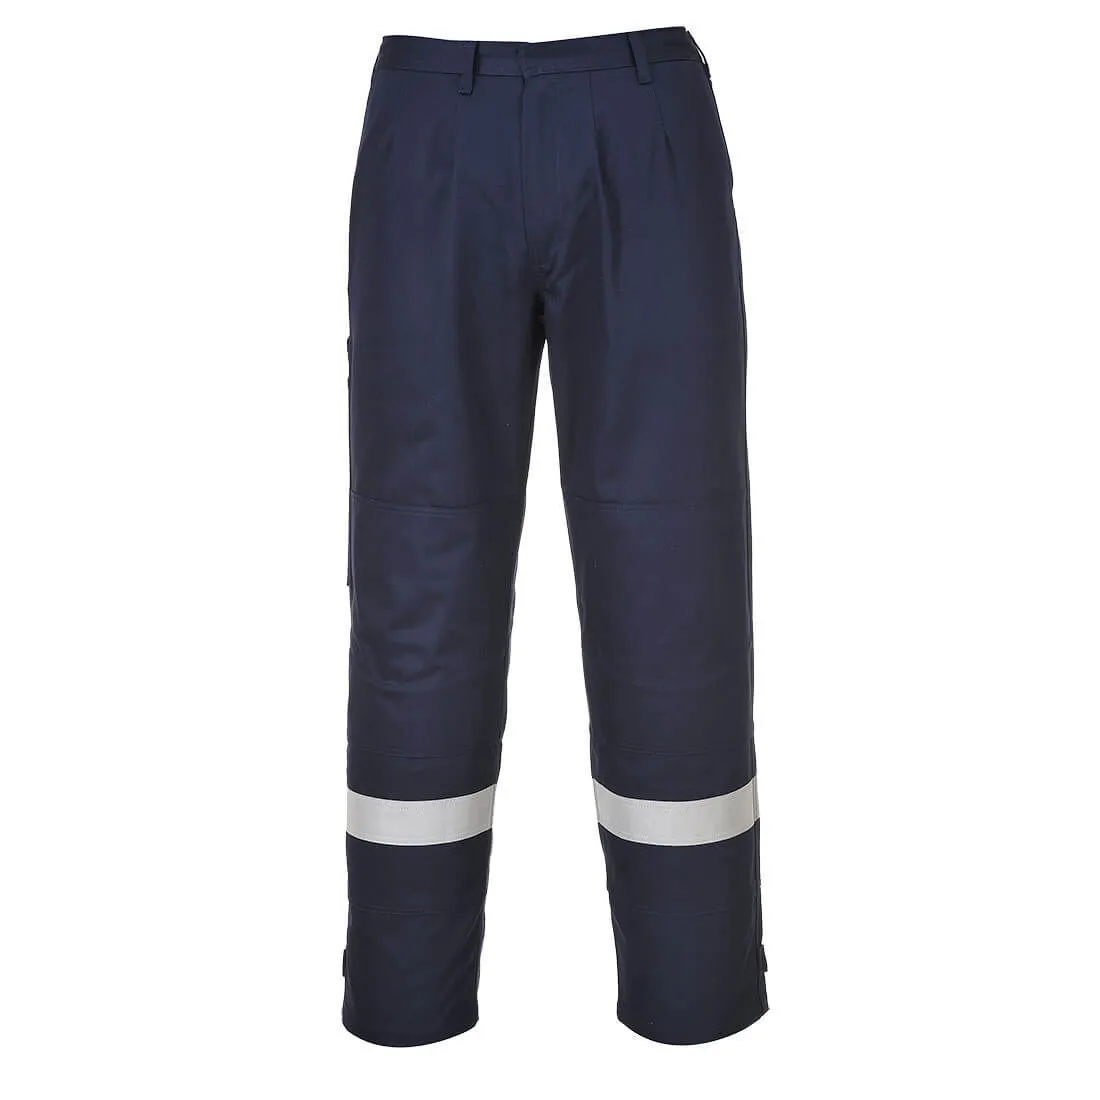 Biz Flame Plus Mens Flame Resistant Trousers - Navy Blue, Large, 34"